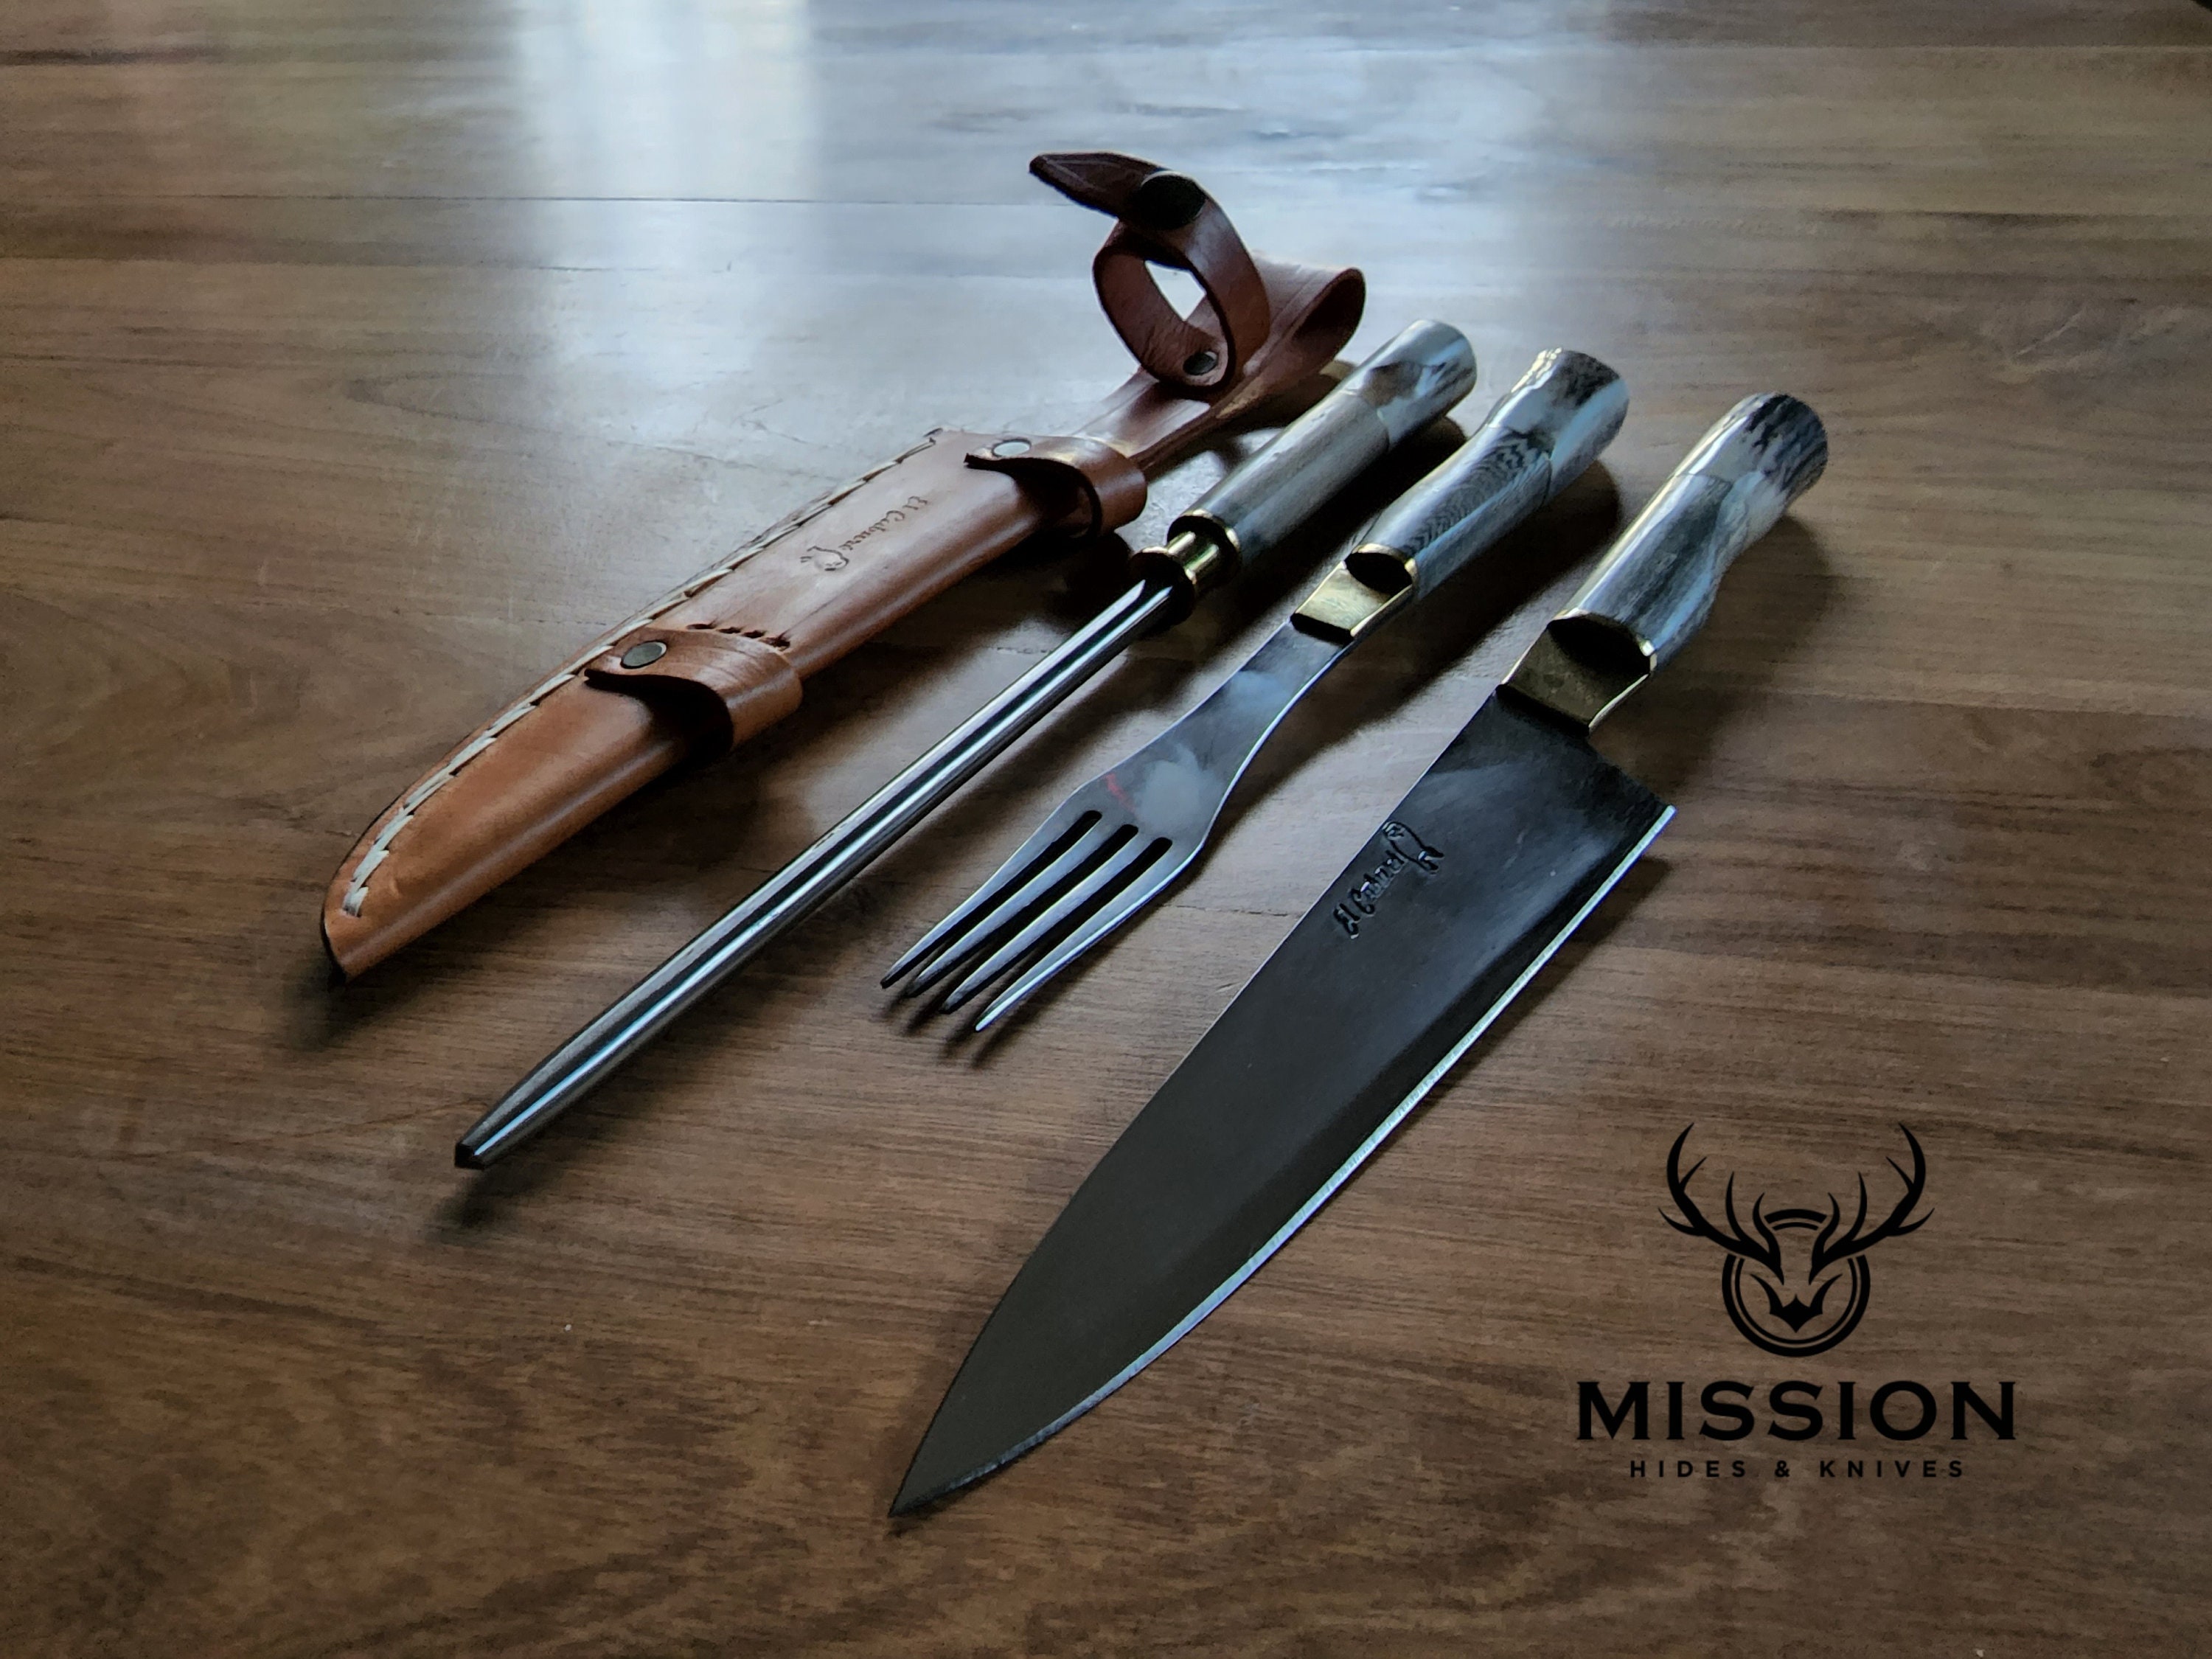 Set de Cuchillo & Tenedor Expulsor Arado Knives Grill Set w